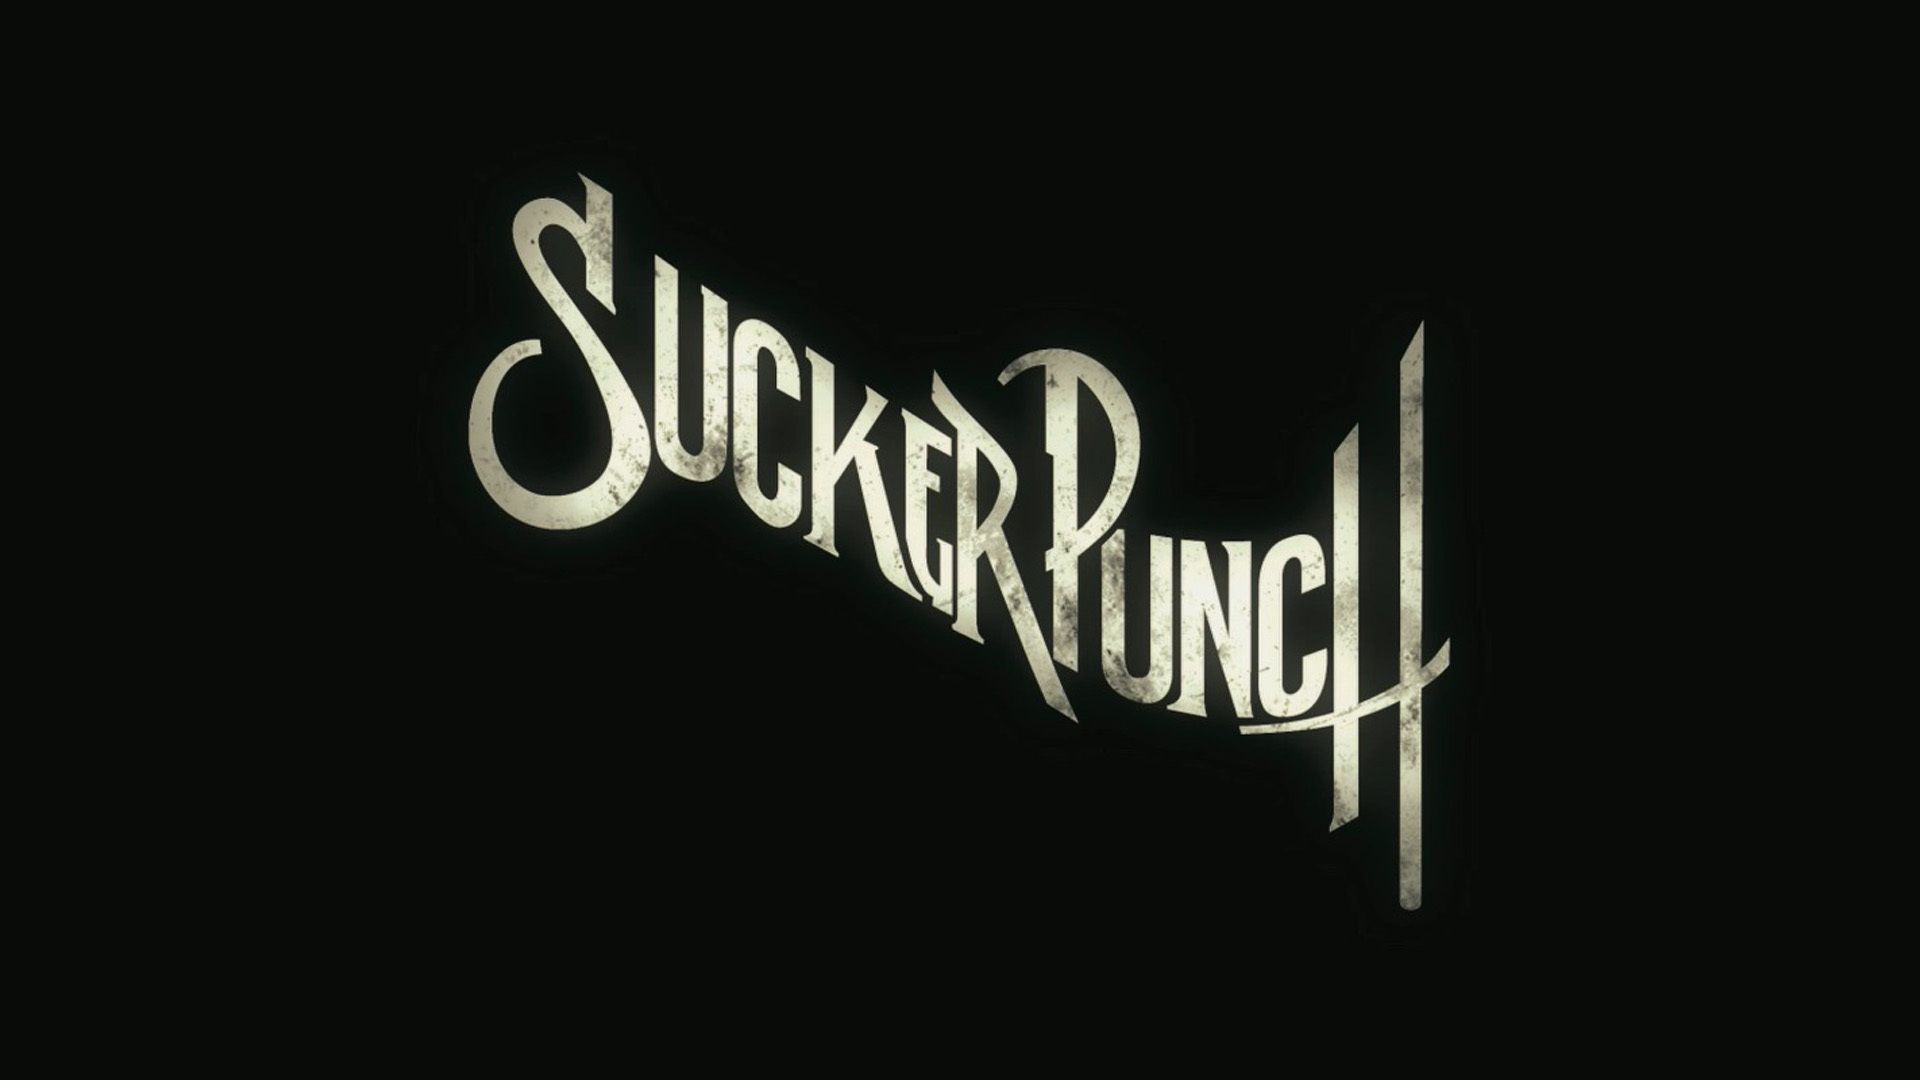 Sucker Punch - Sucker Punch Wallpaper 20757255 - Fanpop